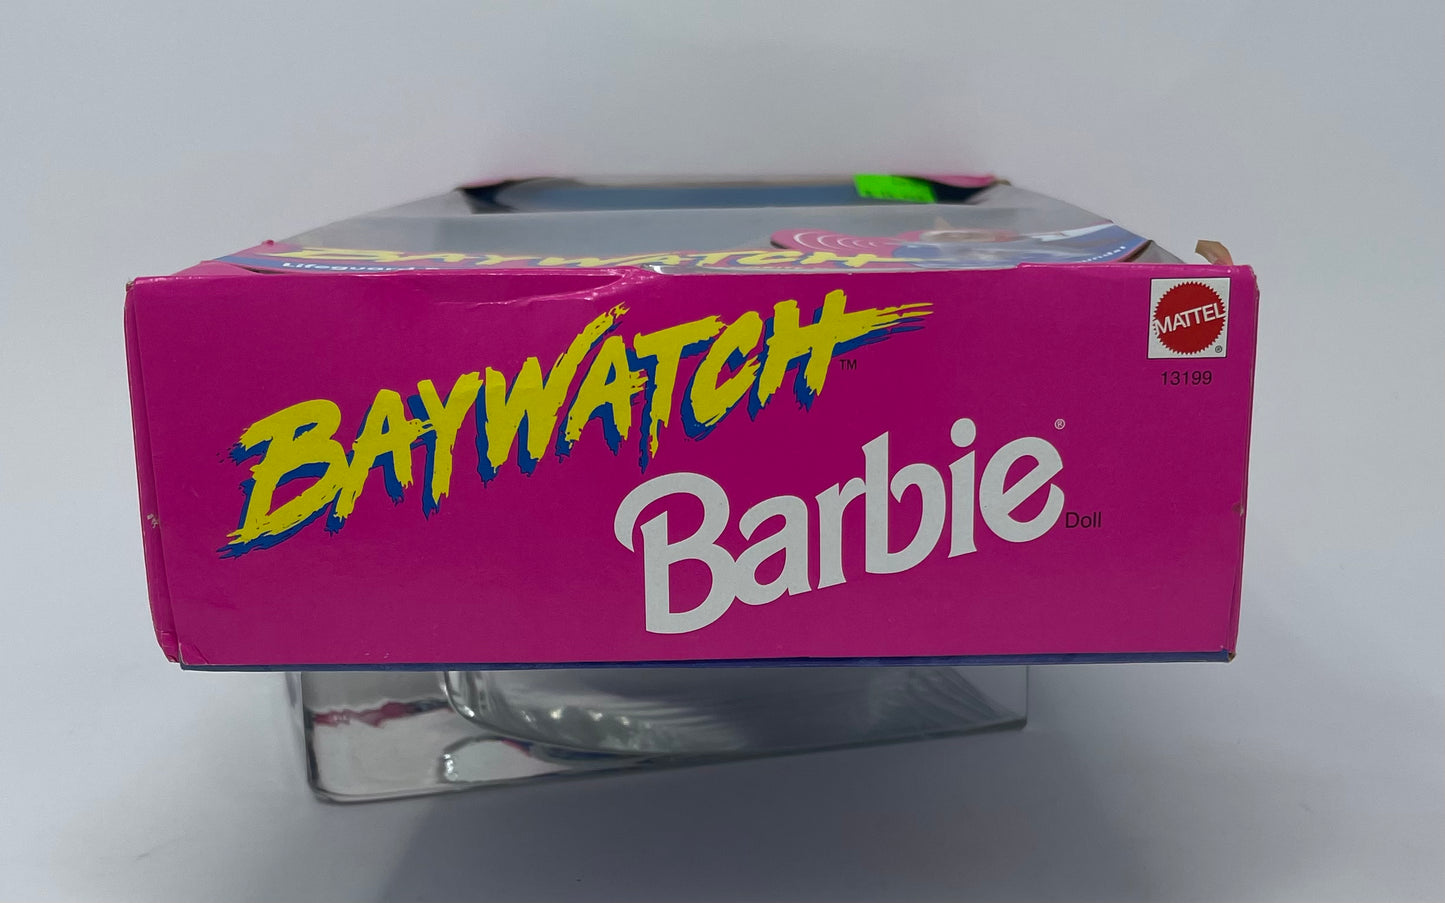 BAYWATCH BARBIE - BLONDE - WITH DOLPHIN #13199 - MATTEL 1994 (1 OF 2)